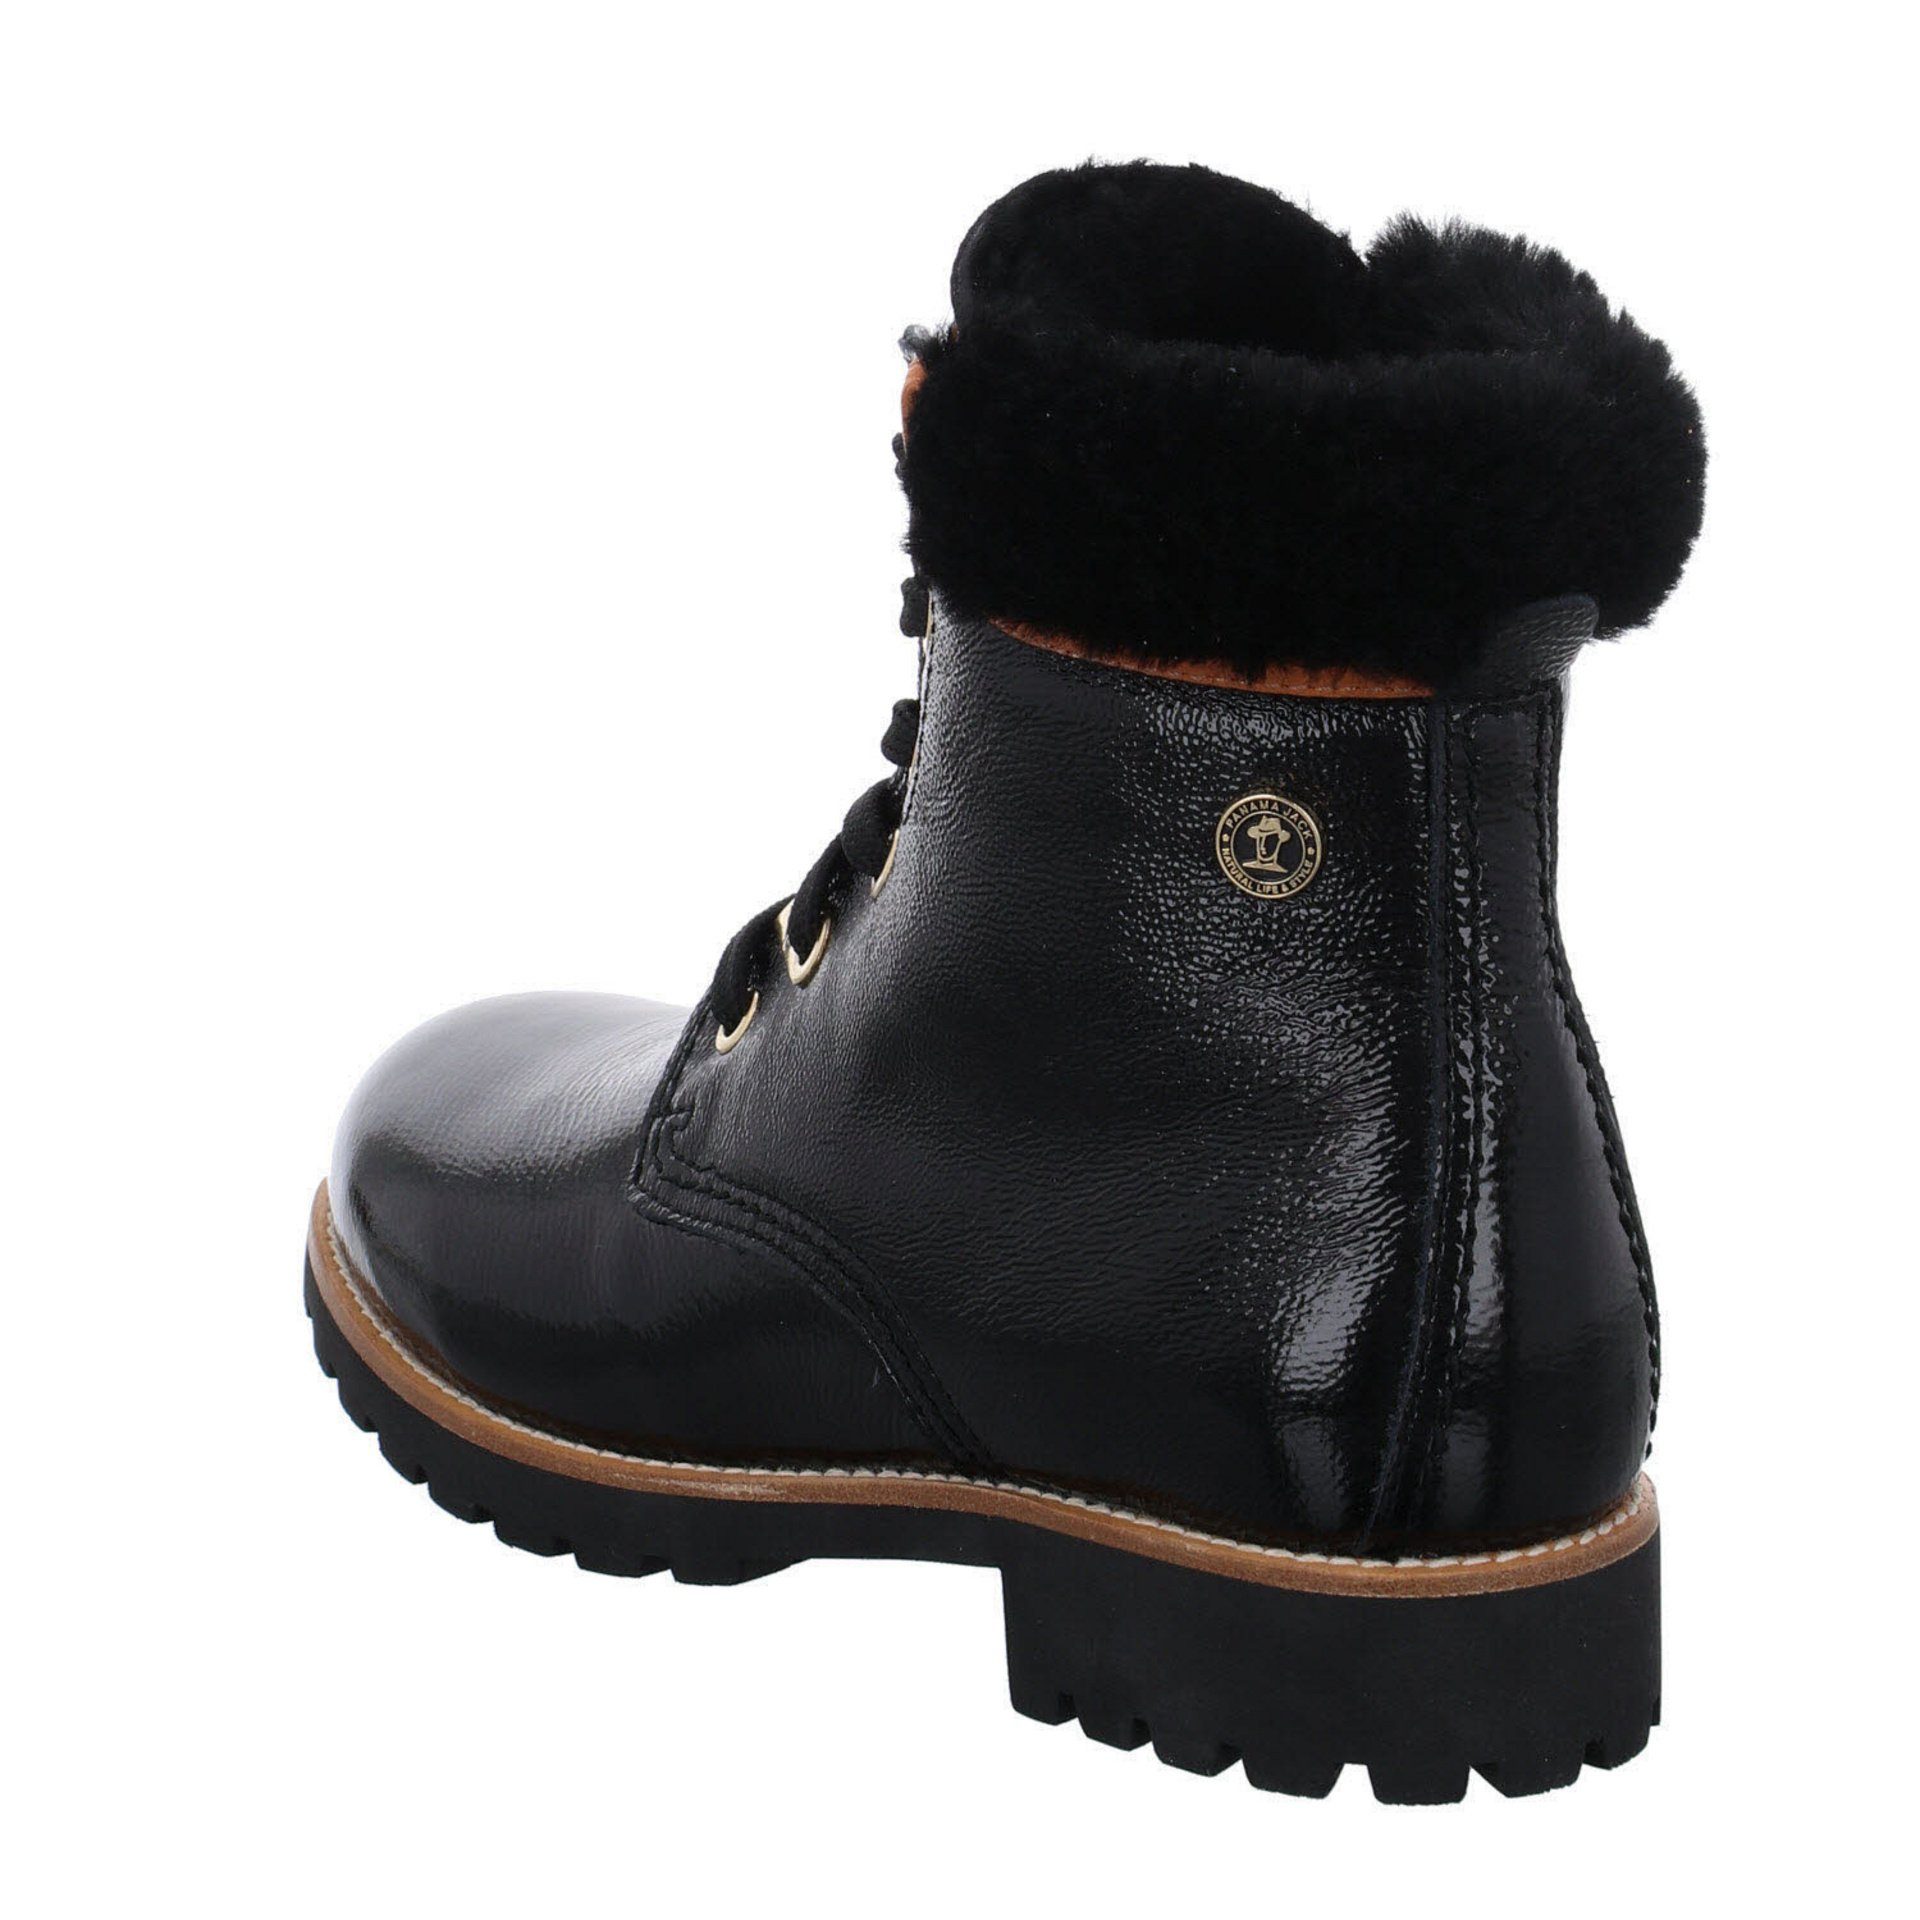 negro/black Stiefel B14 Jack Boots Stiefel Damen Schuhe Panama Lackleder Igloo Trav (16002106)